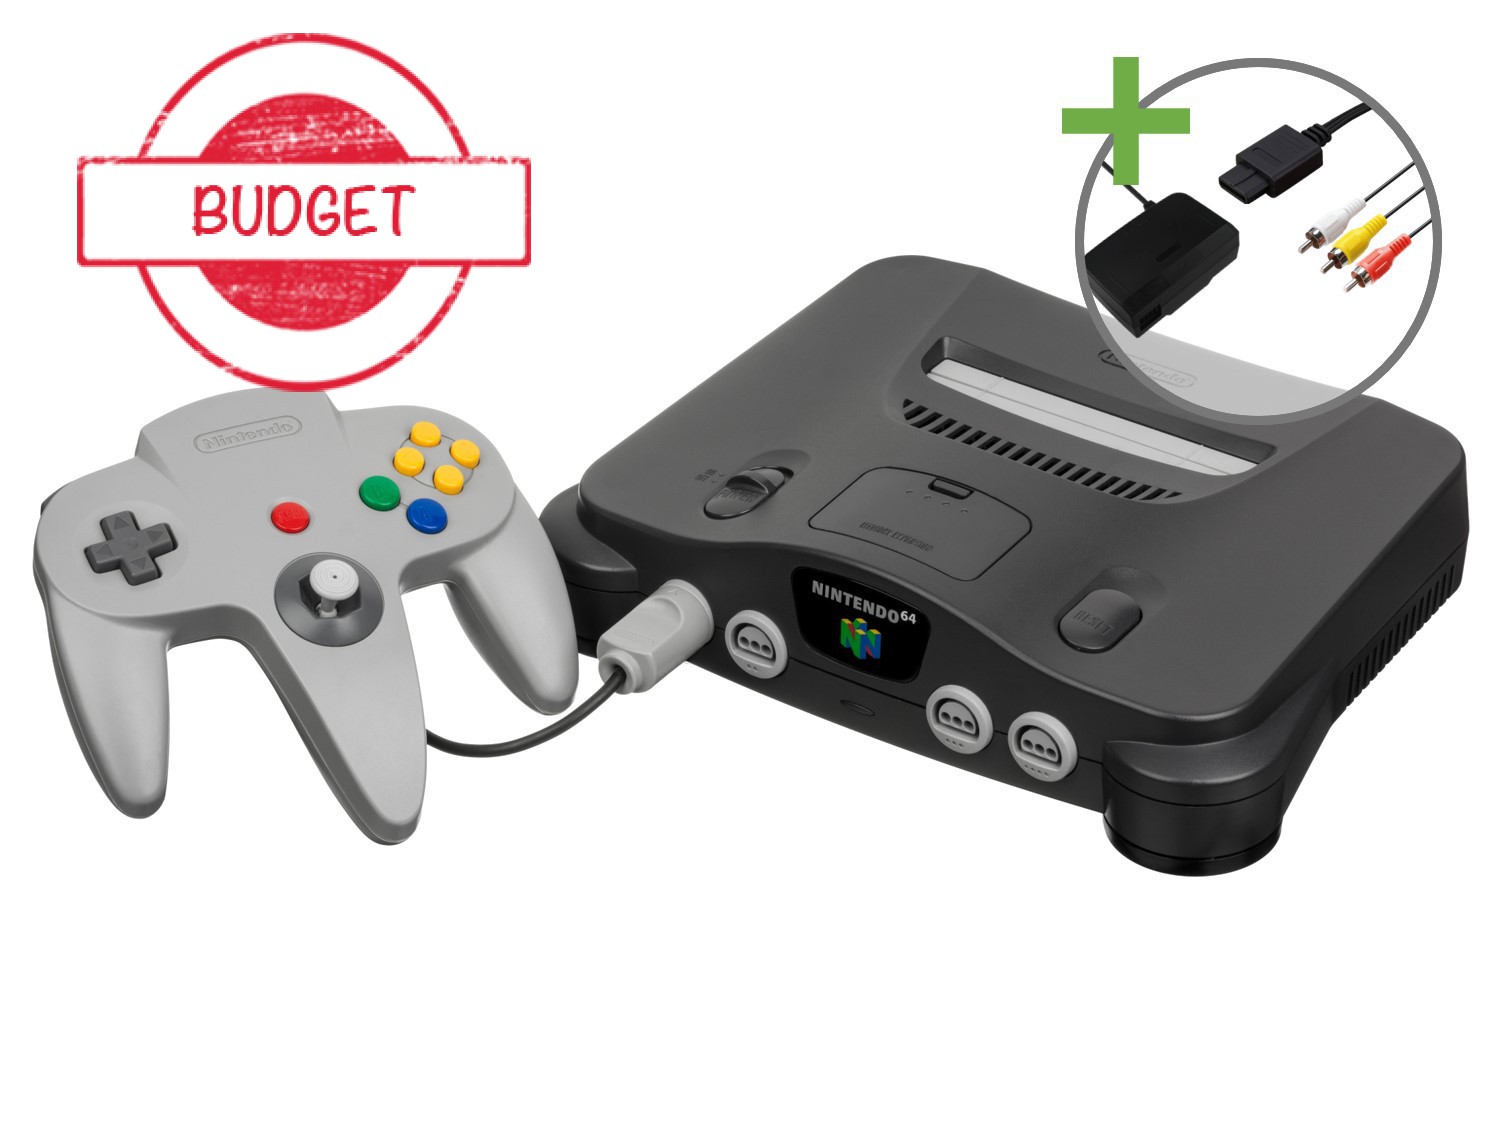 Nintendo 64 Starter Pack - Control Deck Edition - Budget Kopen | Nintendo 64 Hardware